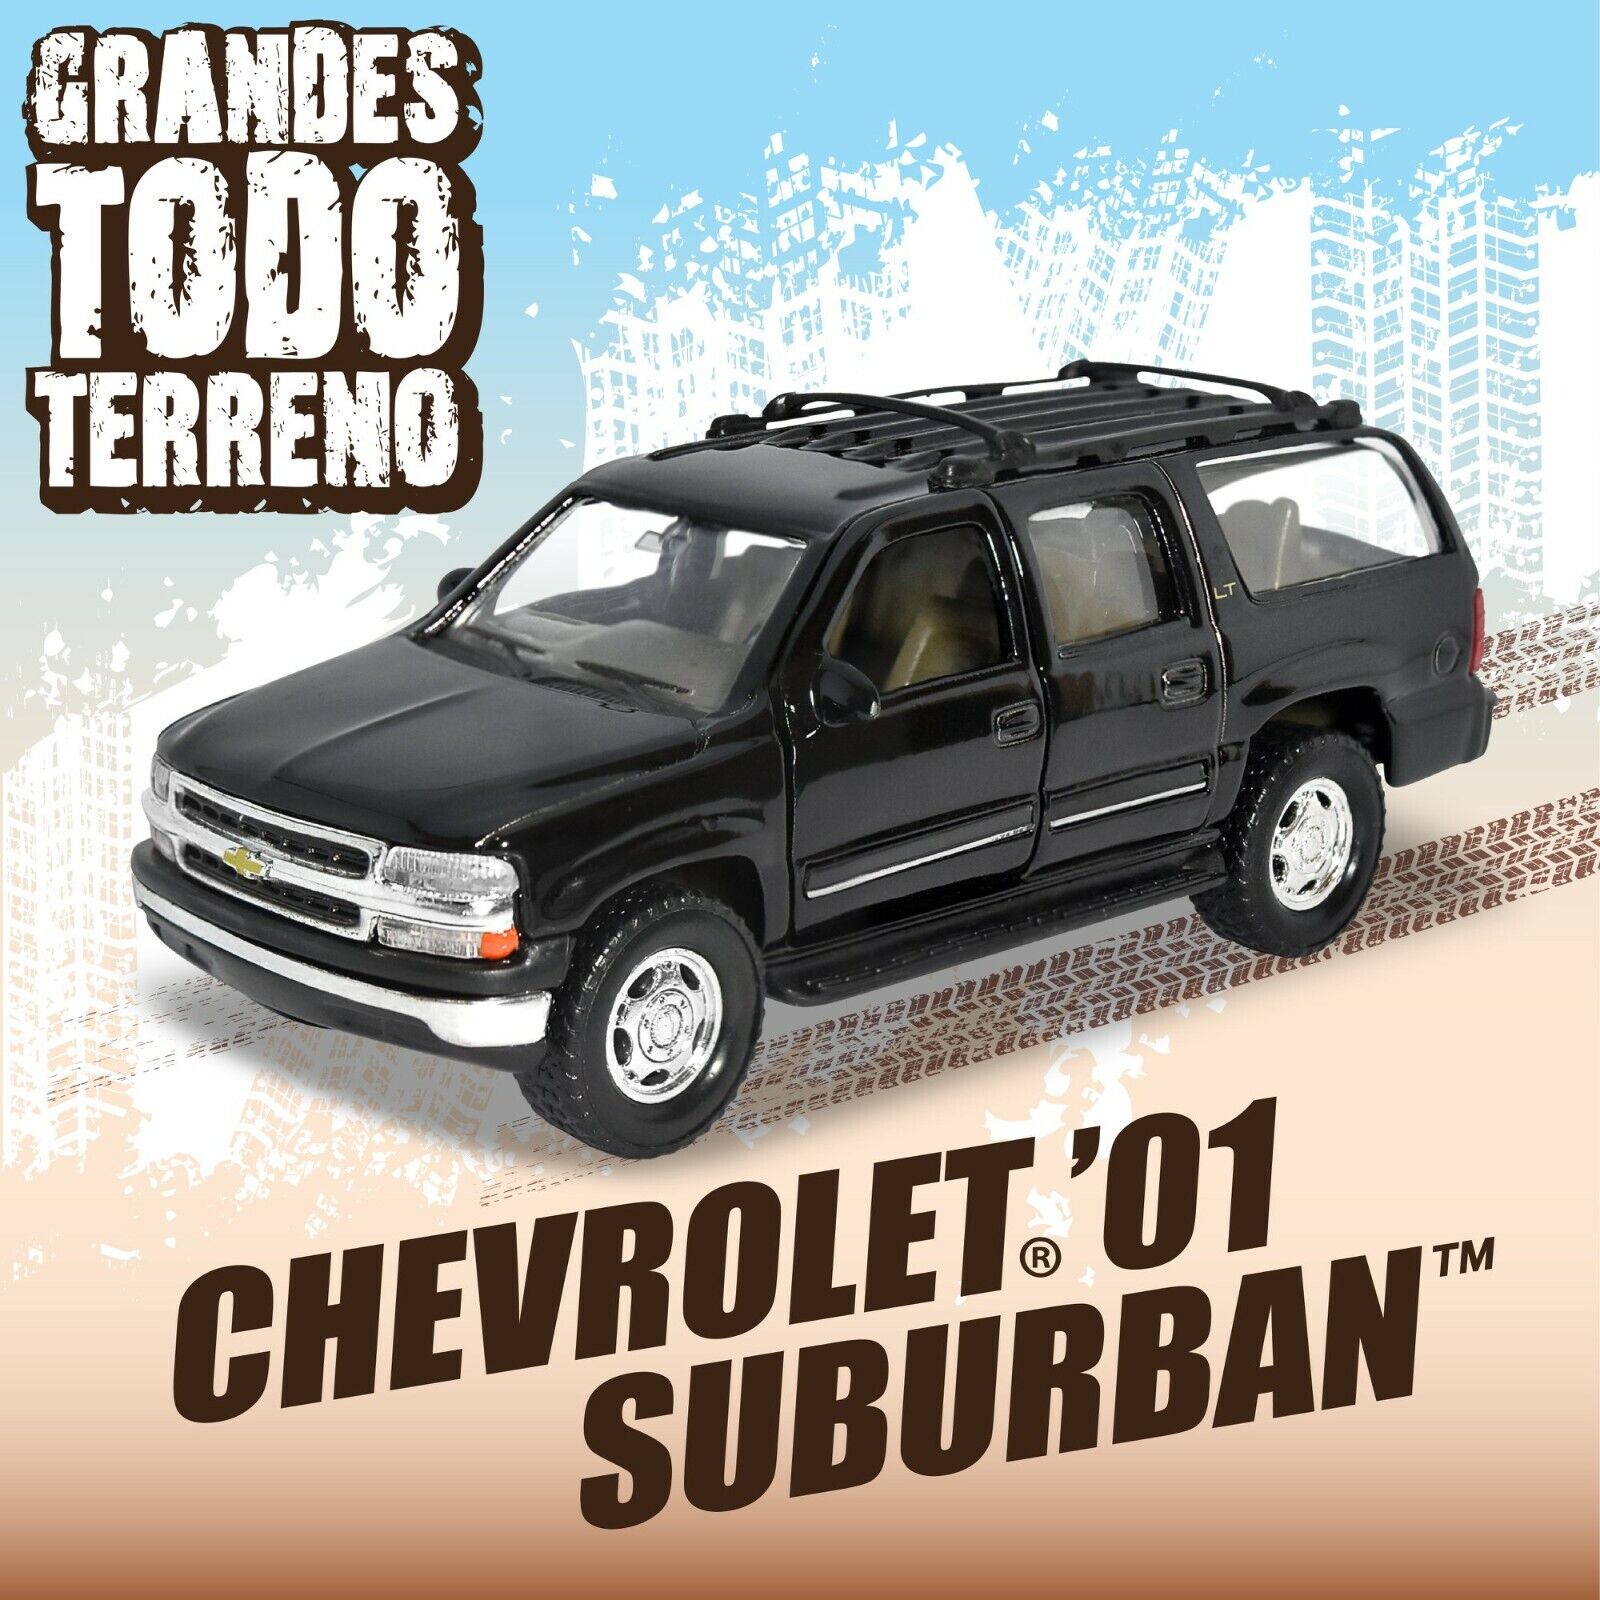 Chevrolet Suburban (2001) Diecast 1:36 Grandes todo Terreno Sealed | eBay